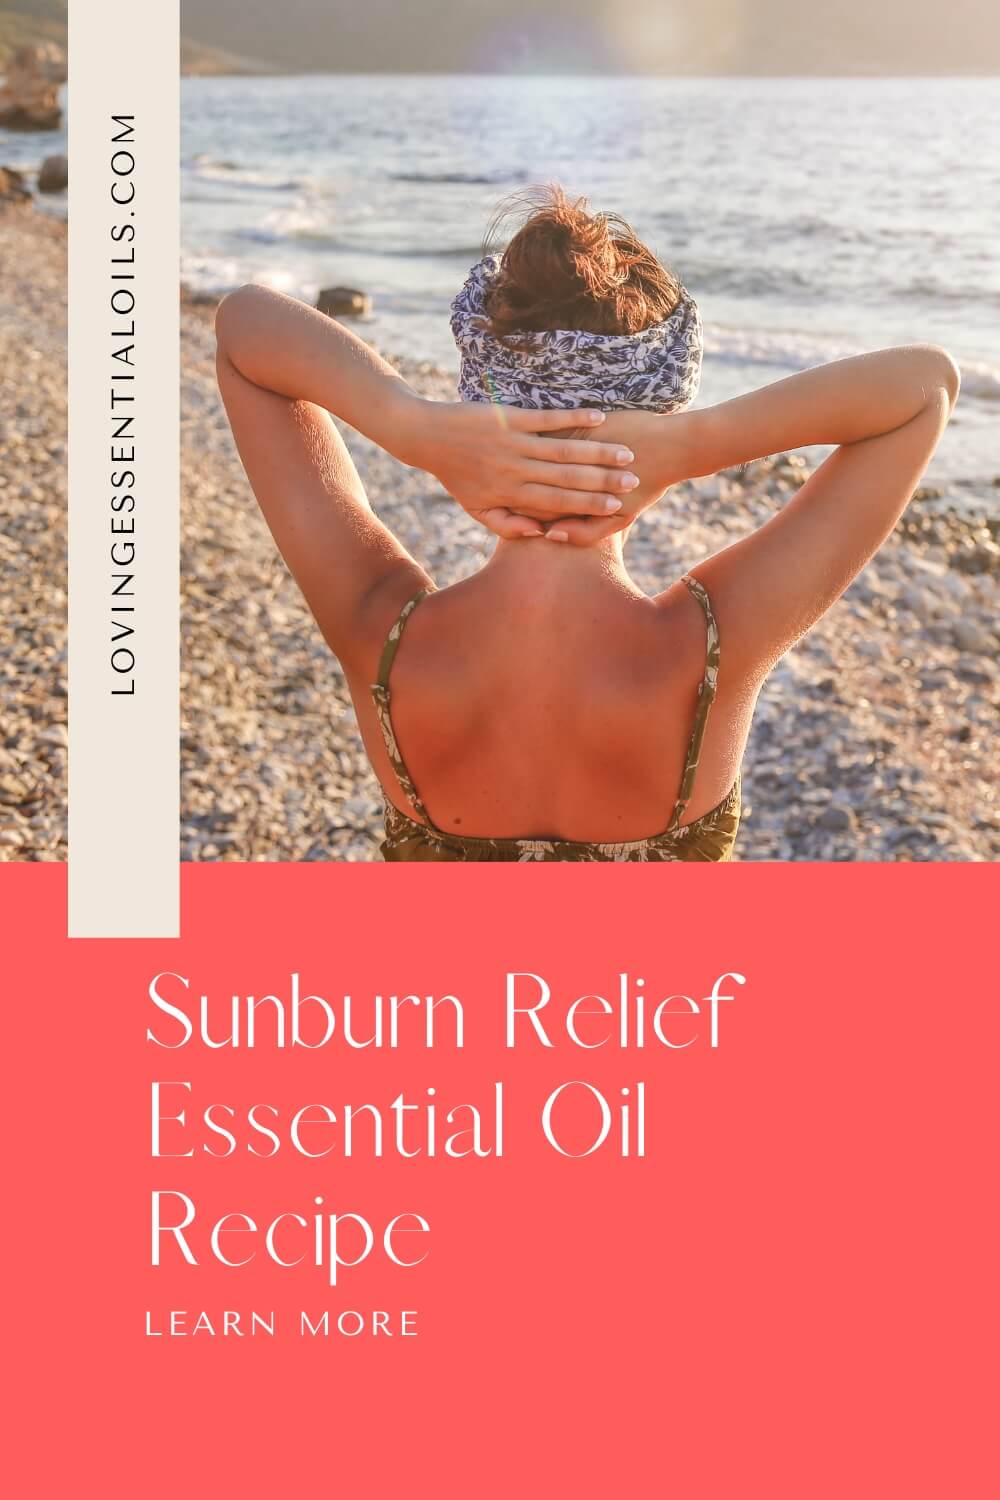 Sunburn Relief Essential Oil Recipe by Loving Essential Oils